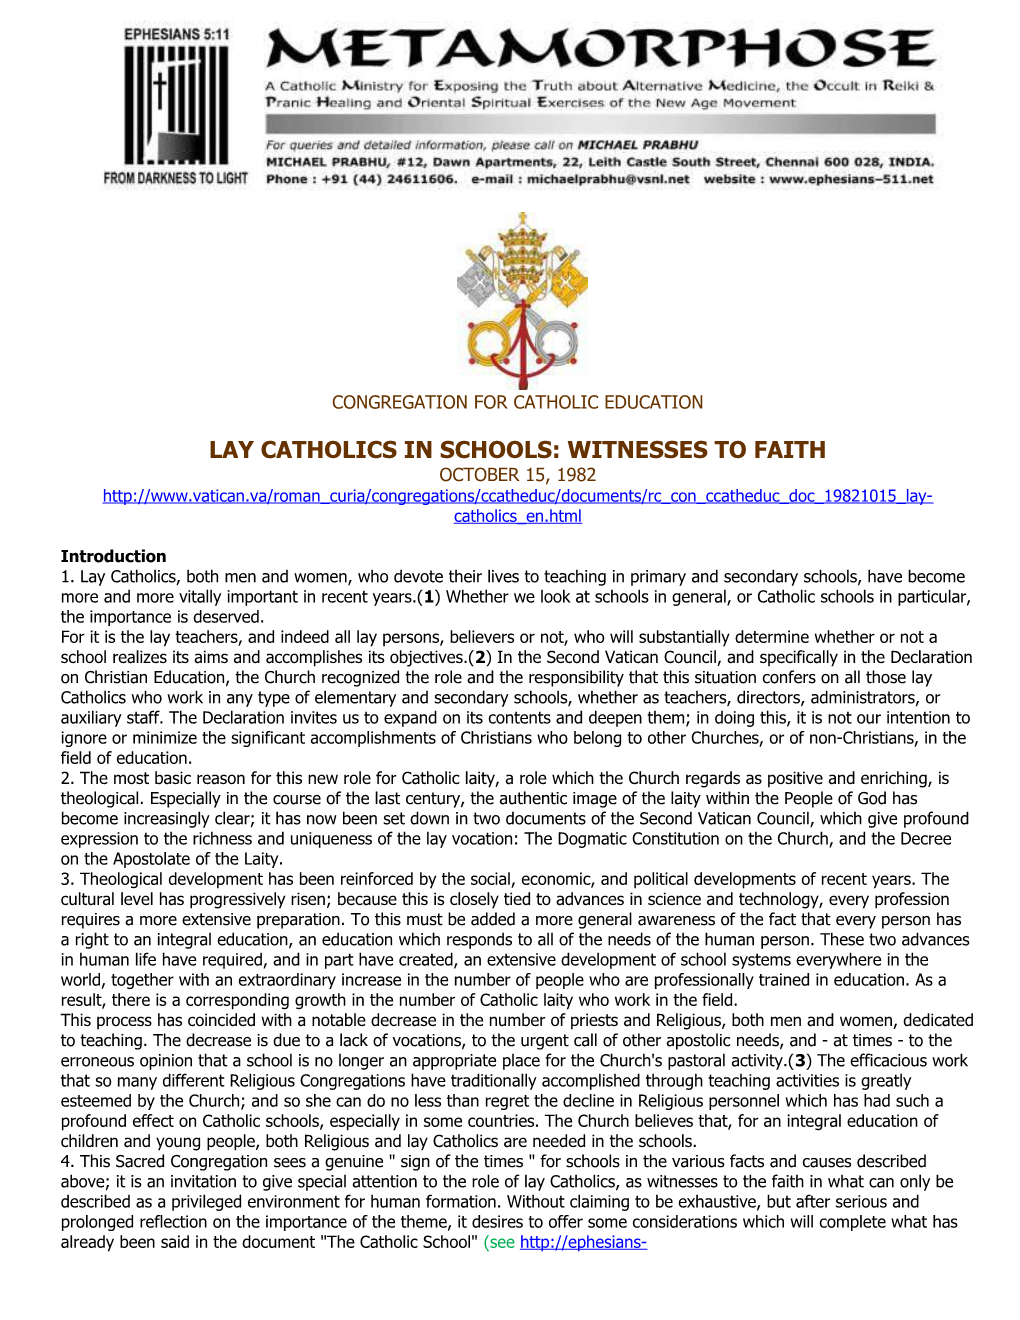 Lay Catholics Inschools: Witnesses to Faith